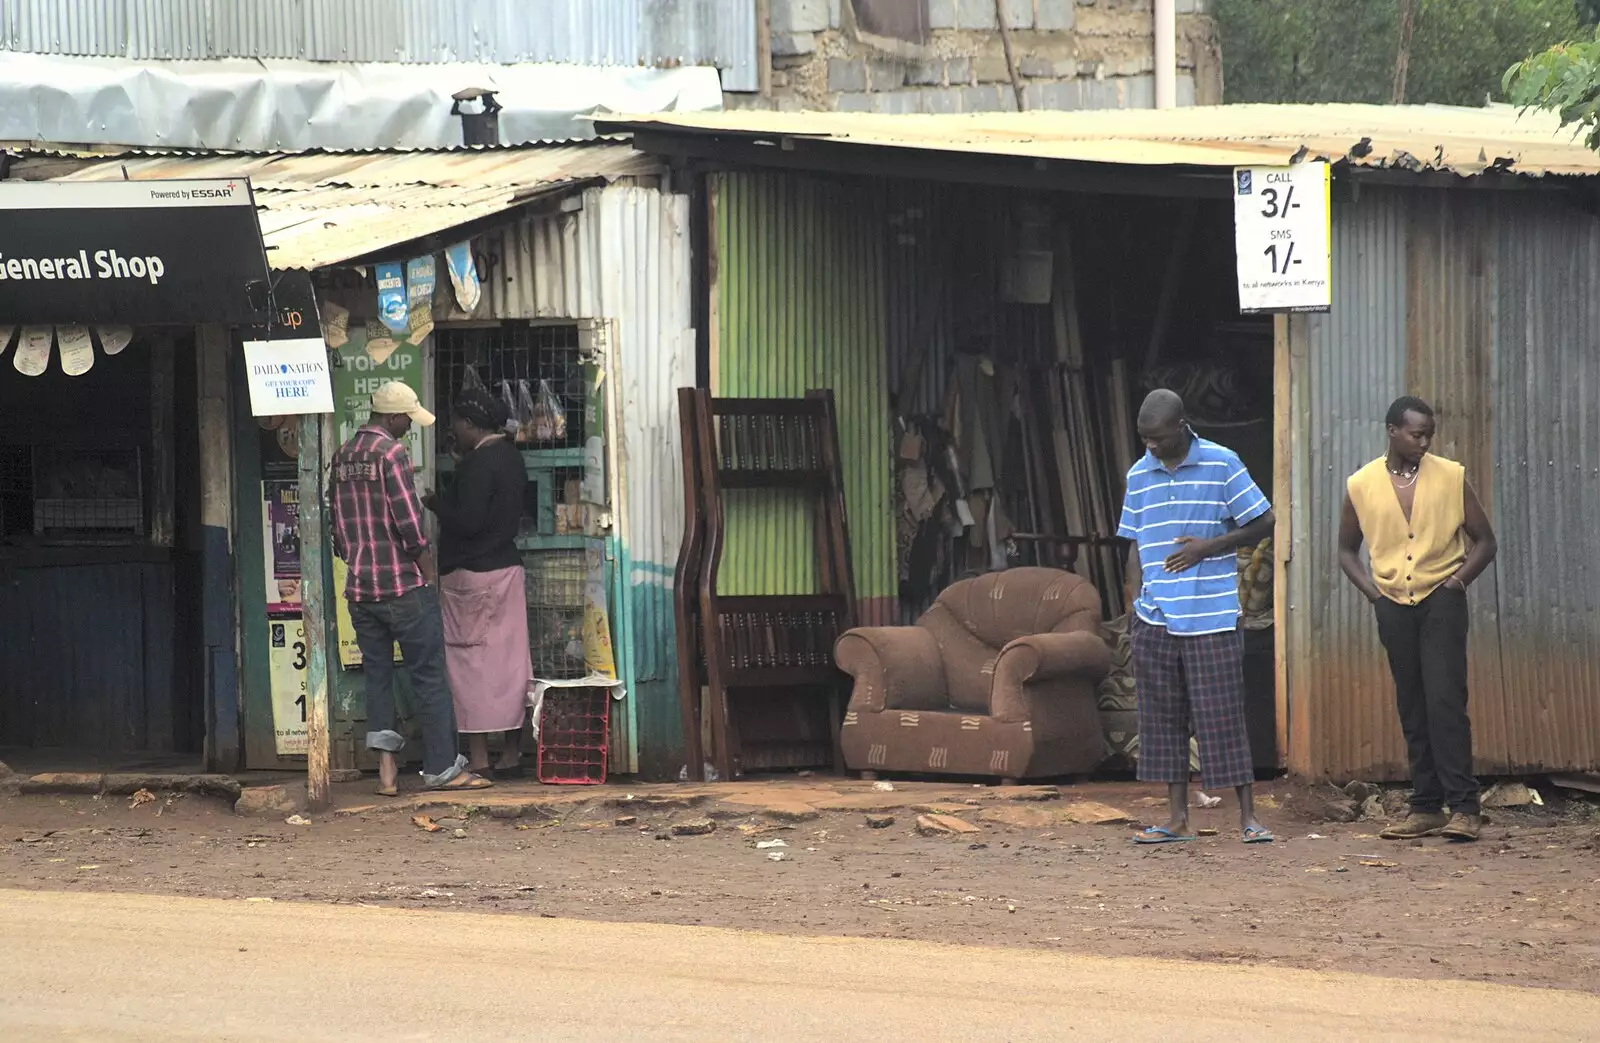 An armchair on the street, from Nairobi and the Road to Maasai Mara, Kenya, Africa - 1st November 2010